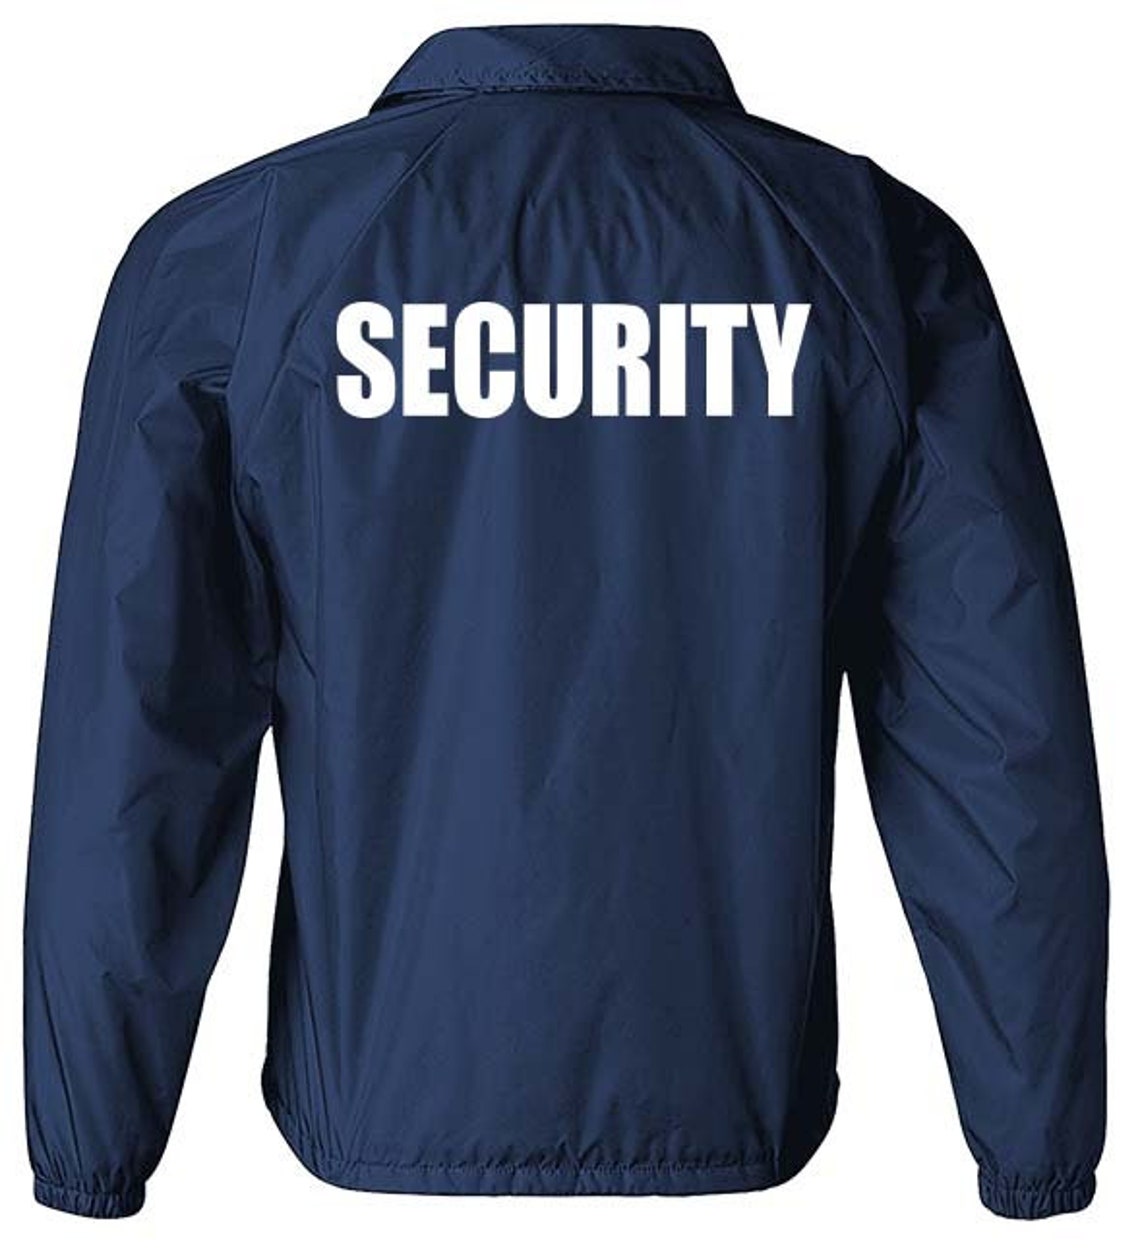 Security Navy Jacket Nylon Security Guard Jacket Law - Etsy